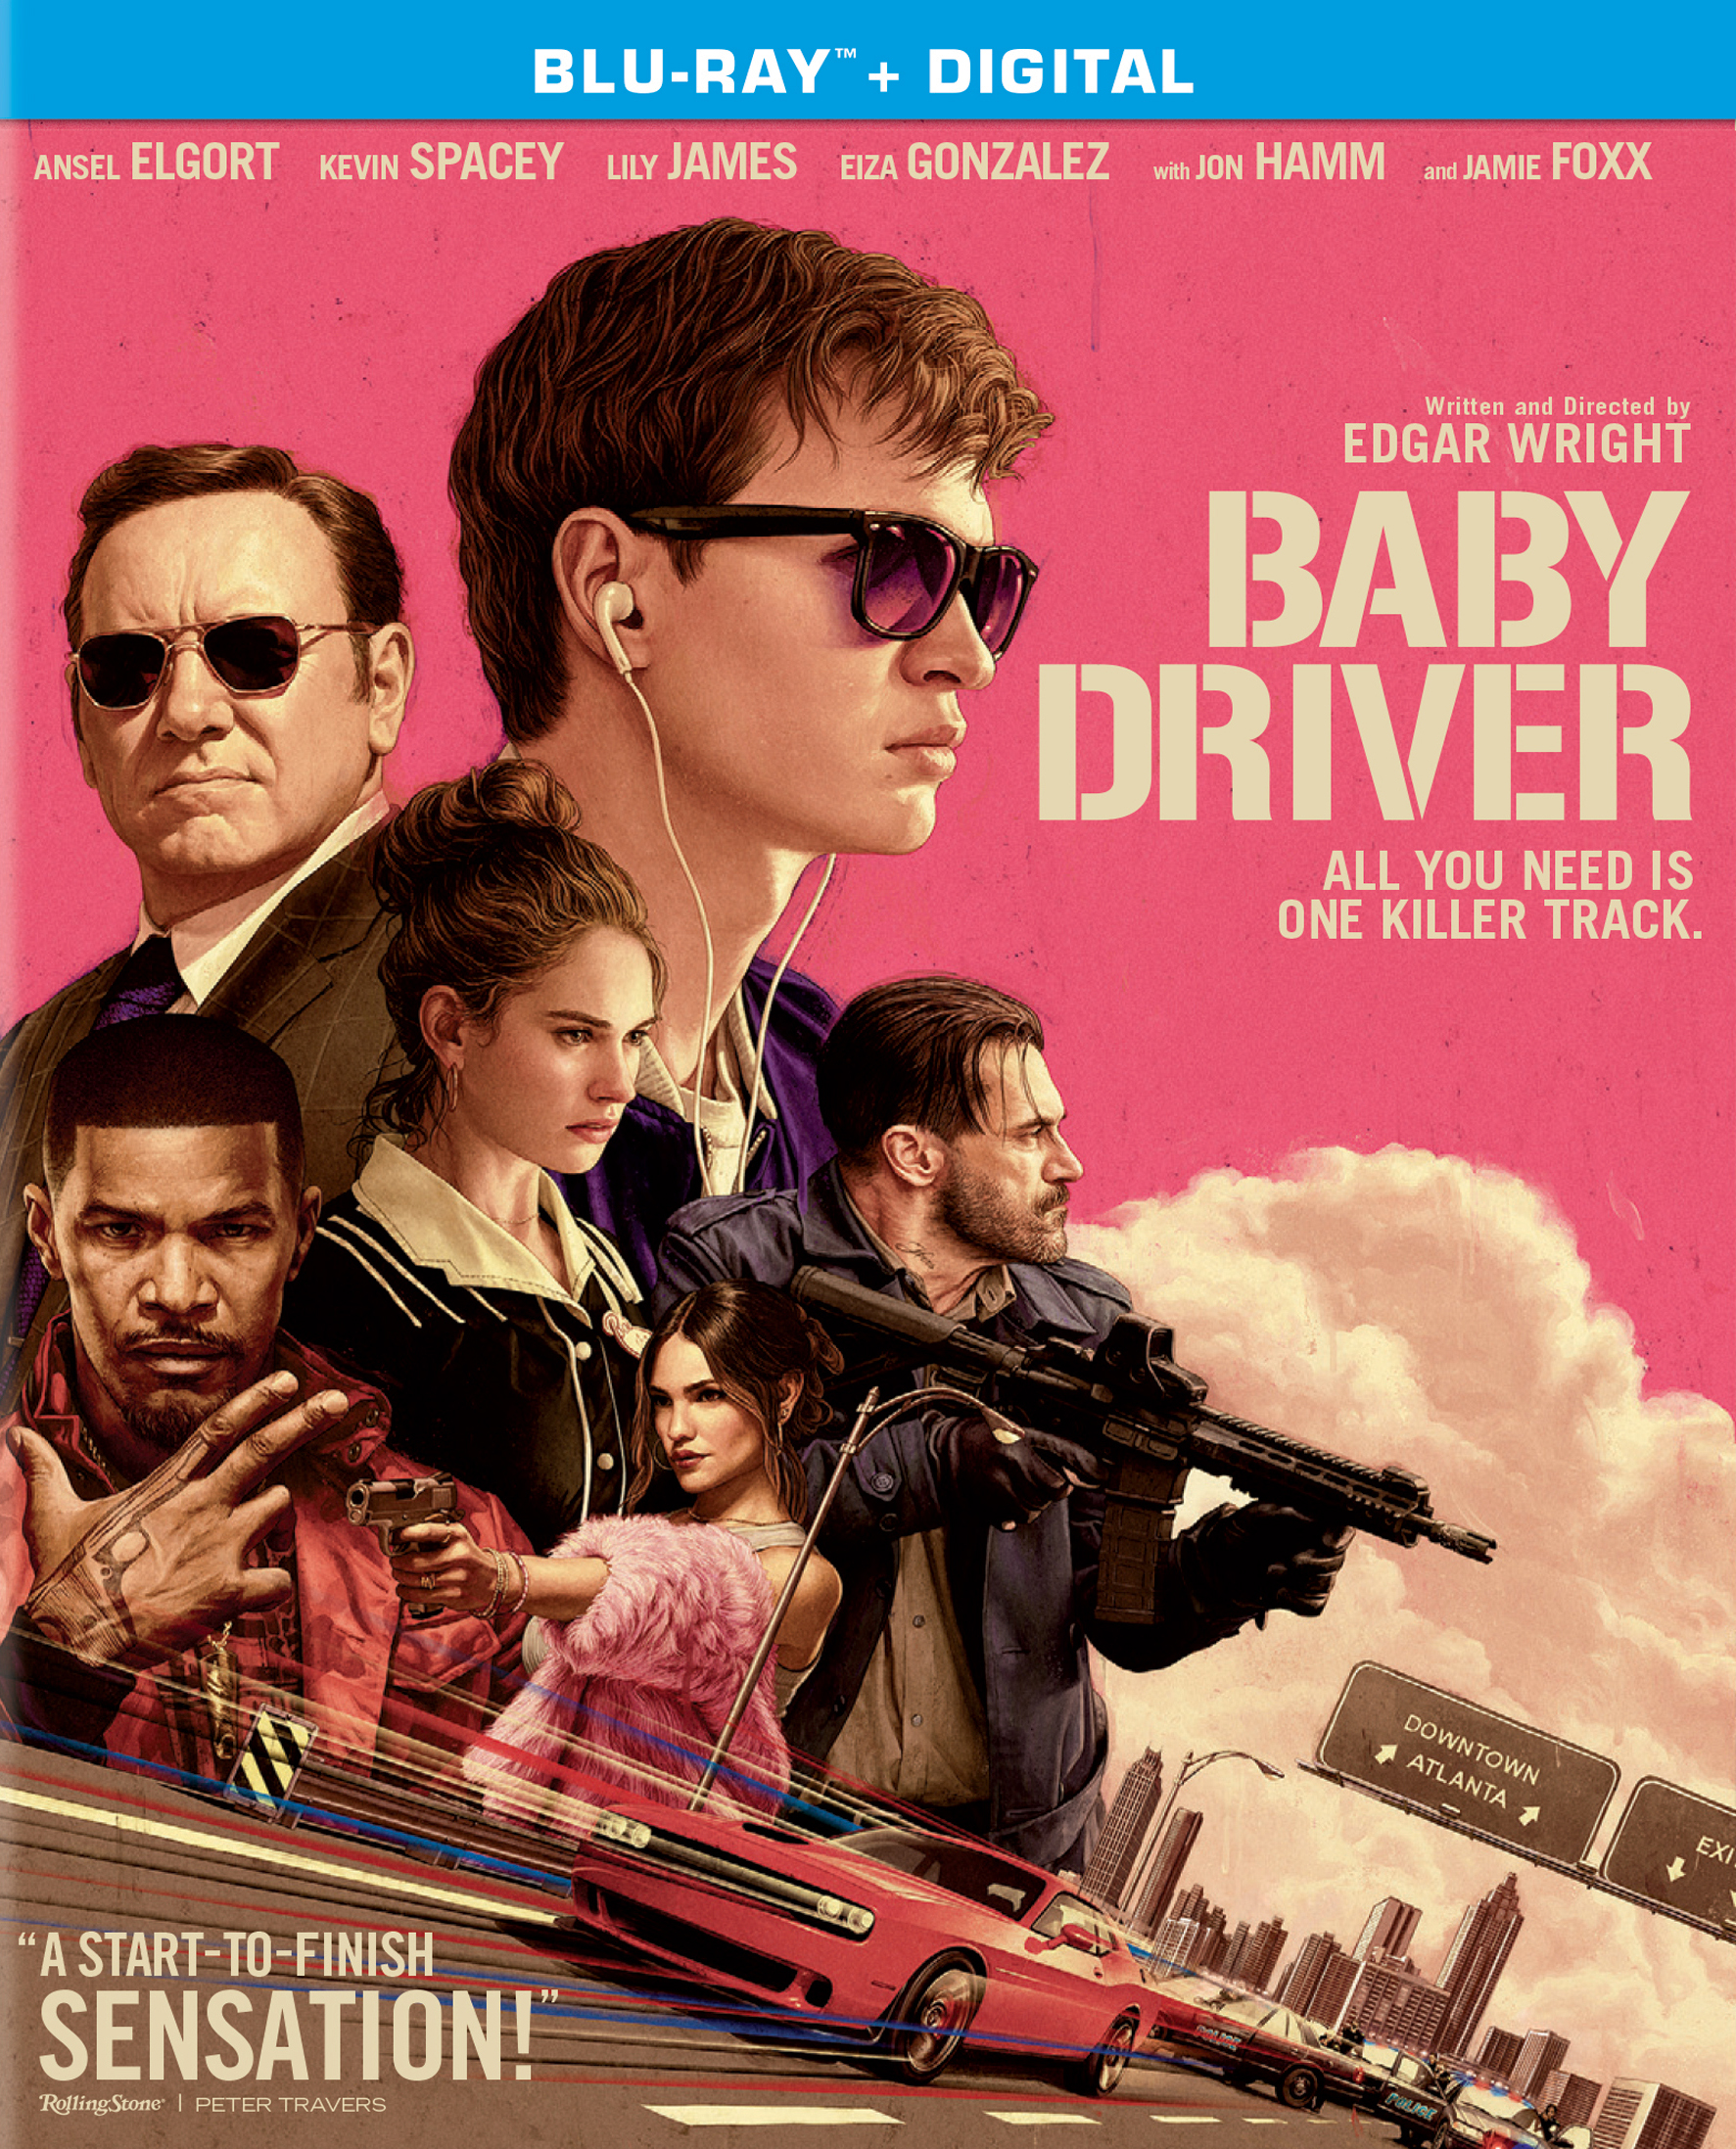 Baby Driver [Includes Digital Copy] [Blu-ray] [2017] - Best Buy